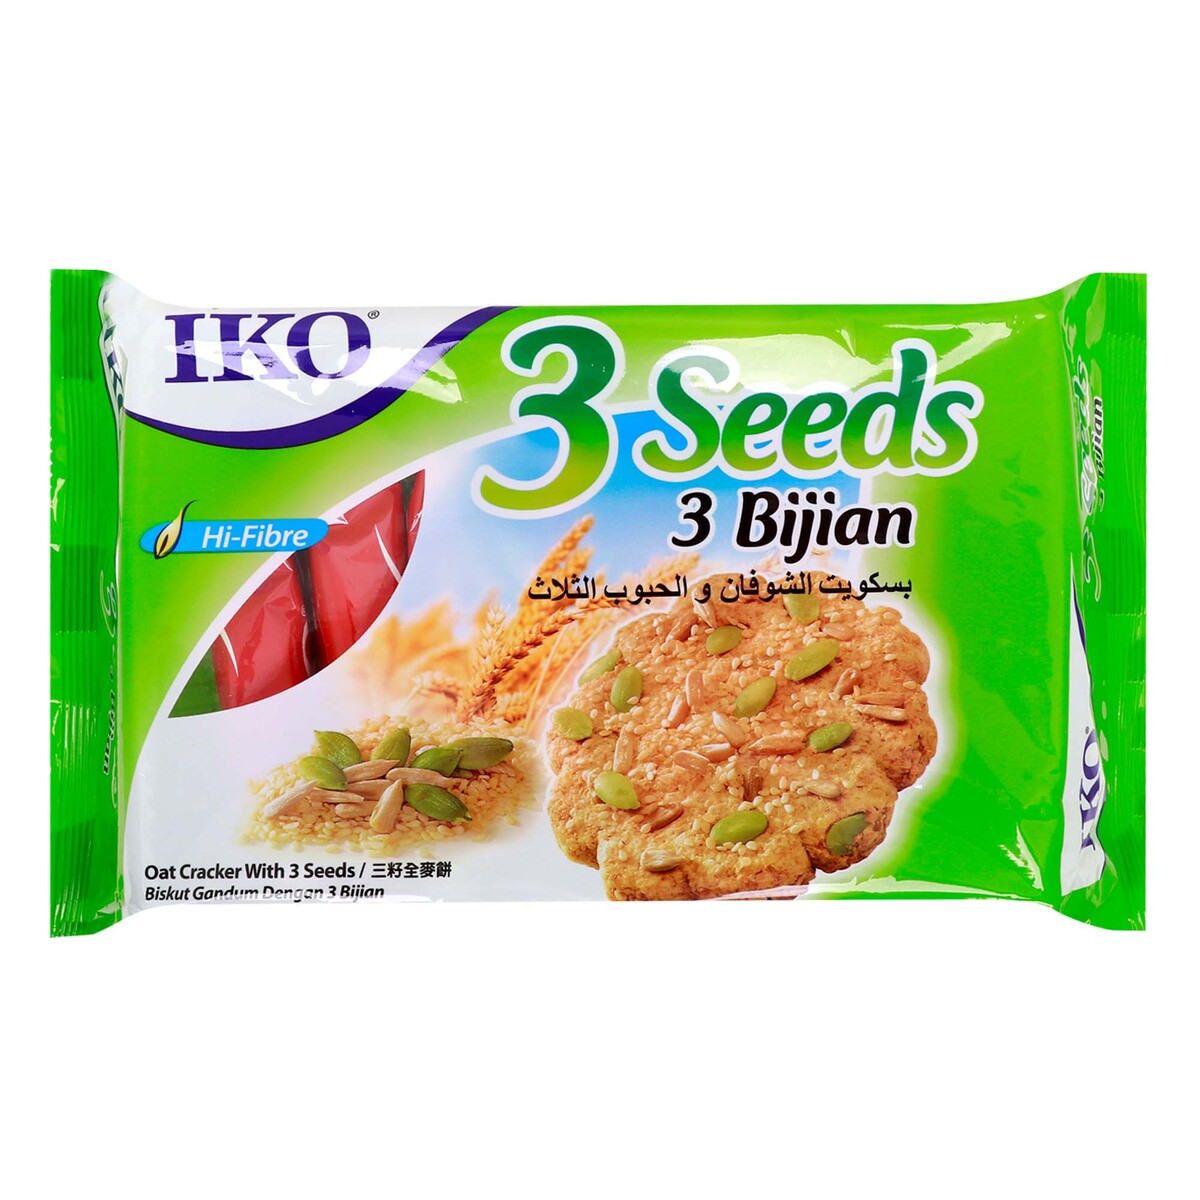 Iko 3-Seeds Cracker, 178 g